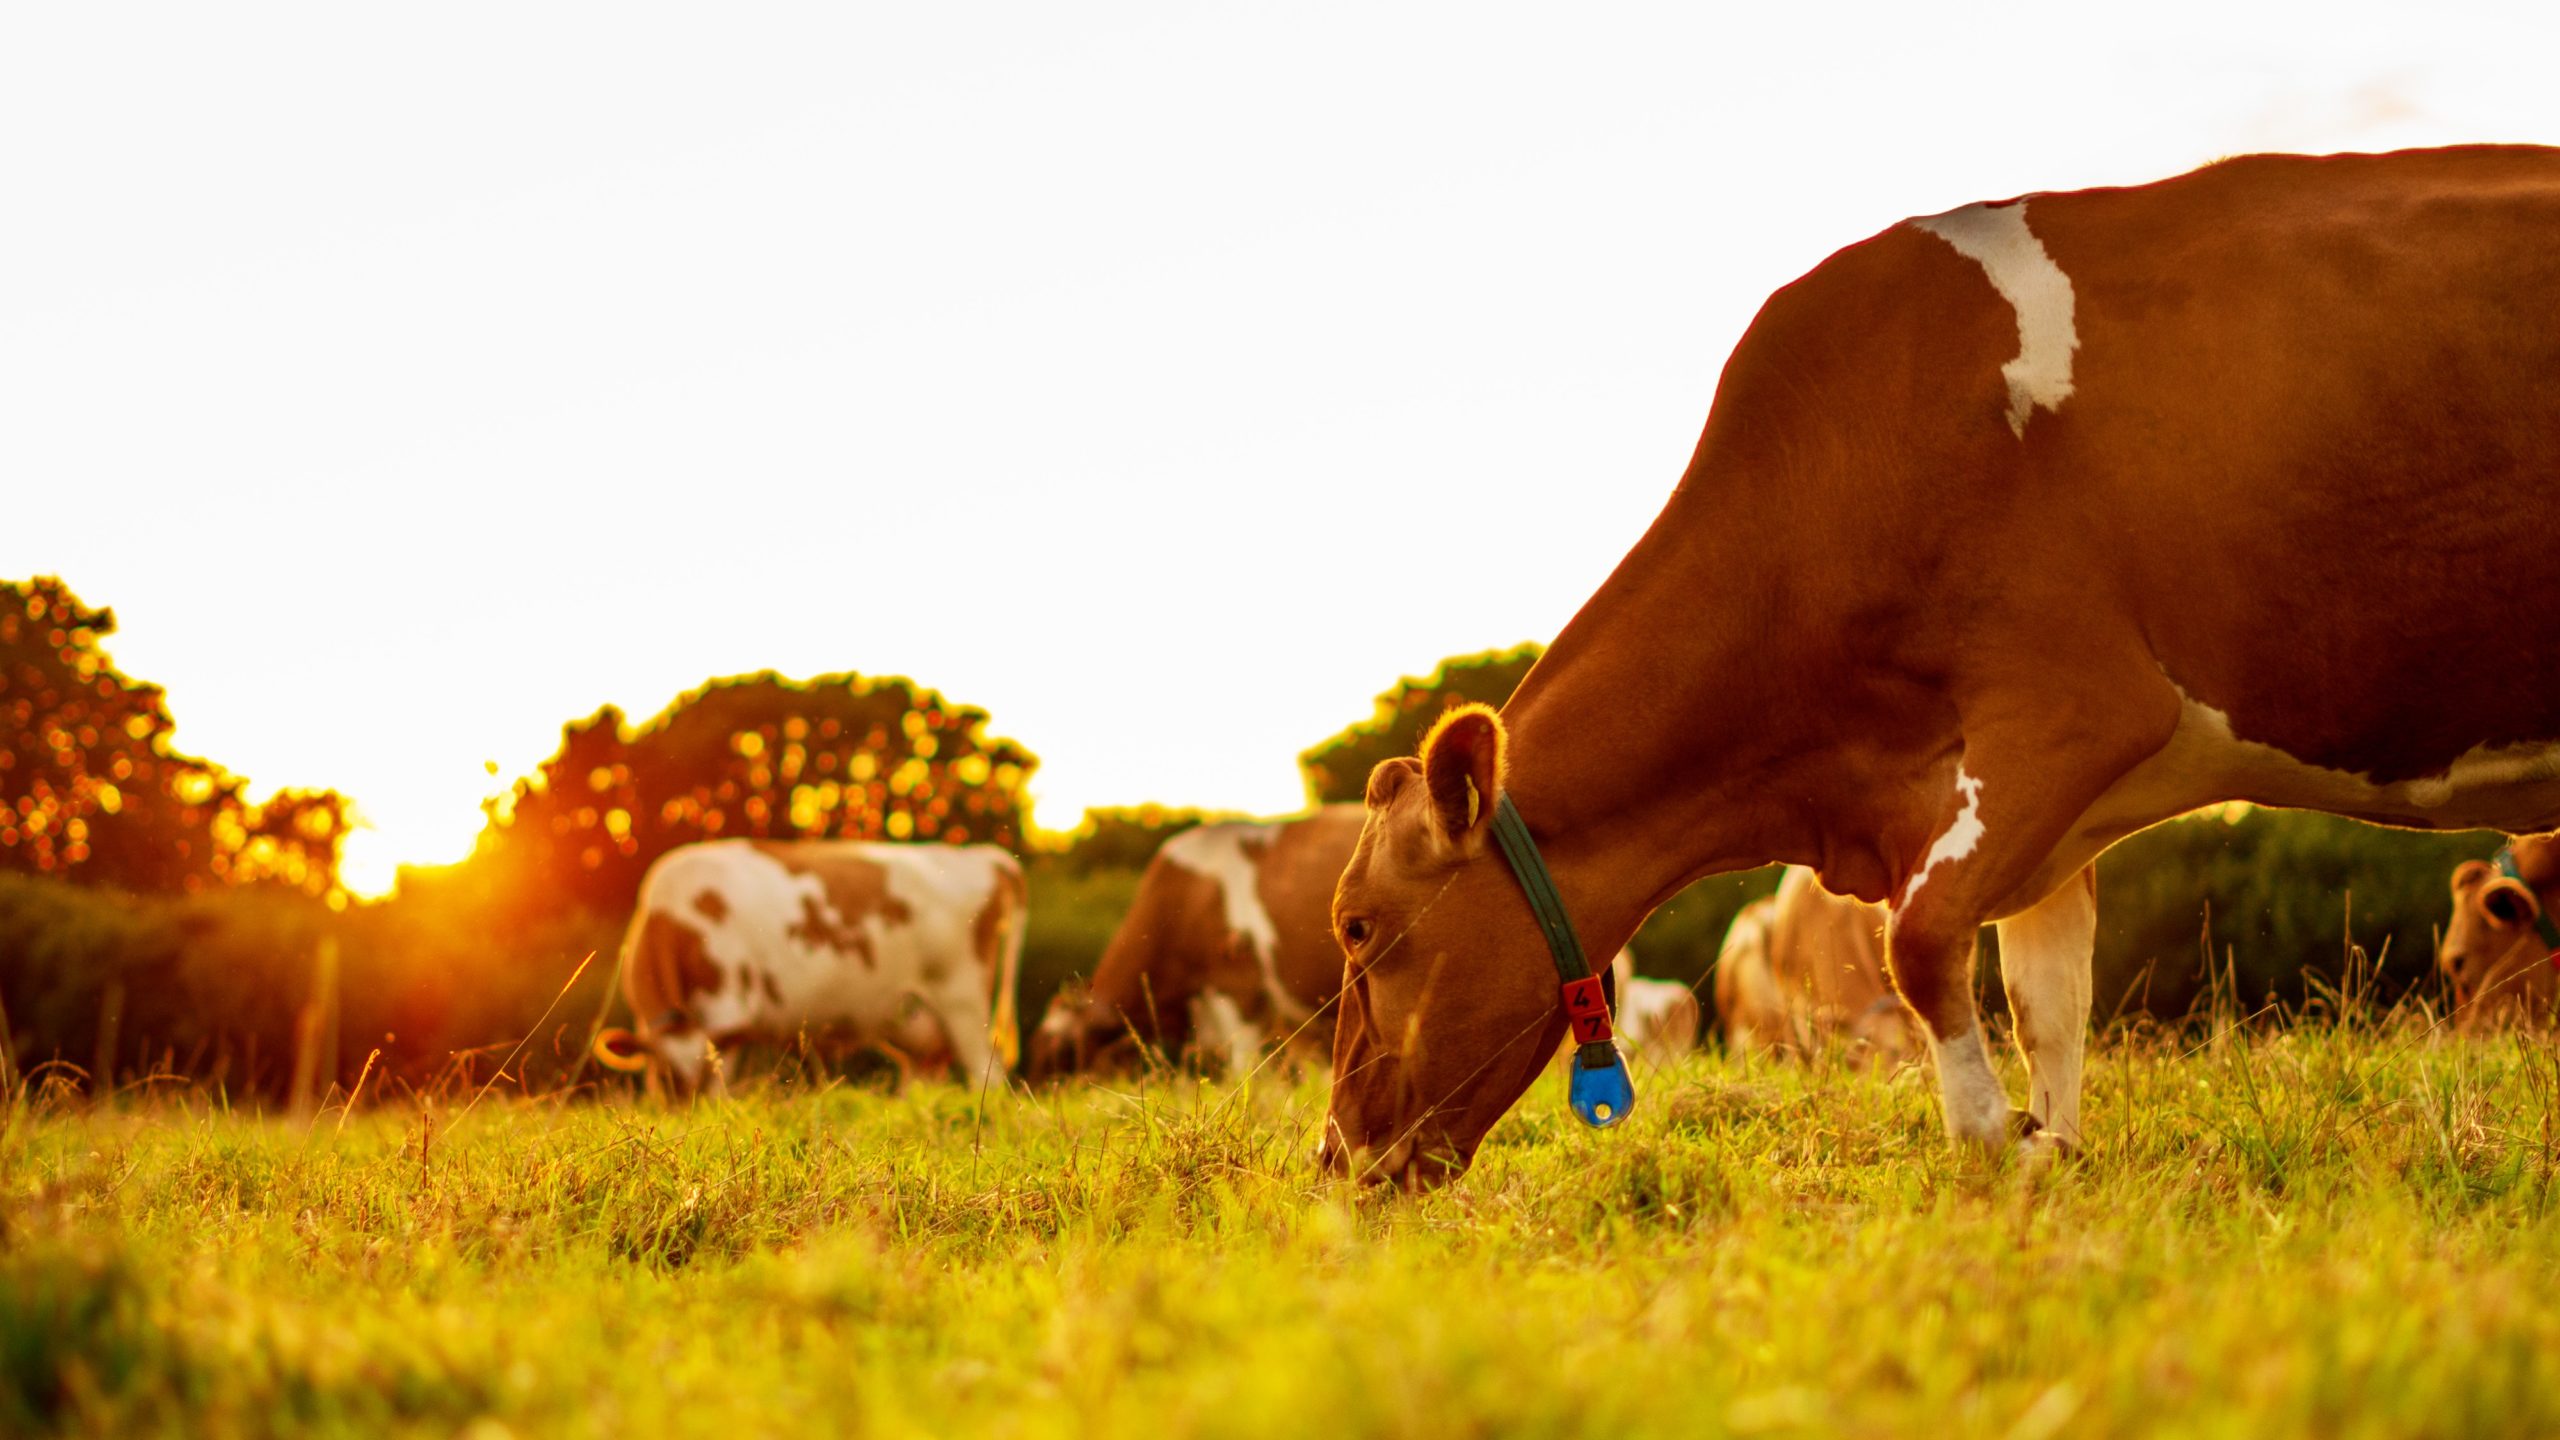 <img src="cows.jpg" alt="cows grazing in a field sunset"/> 